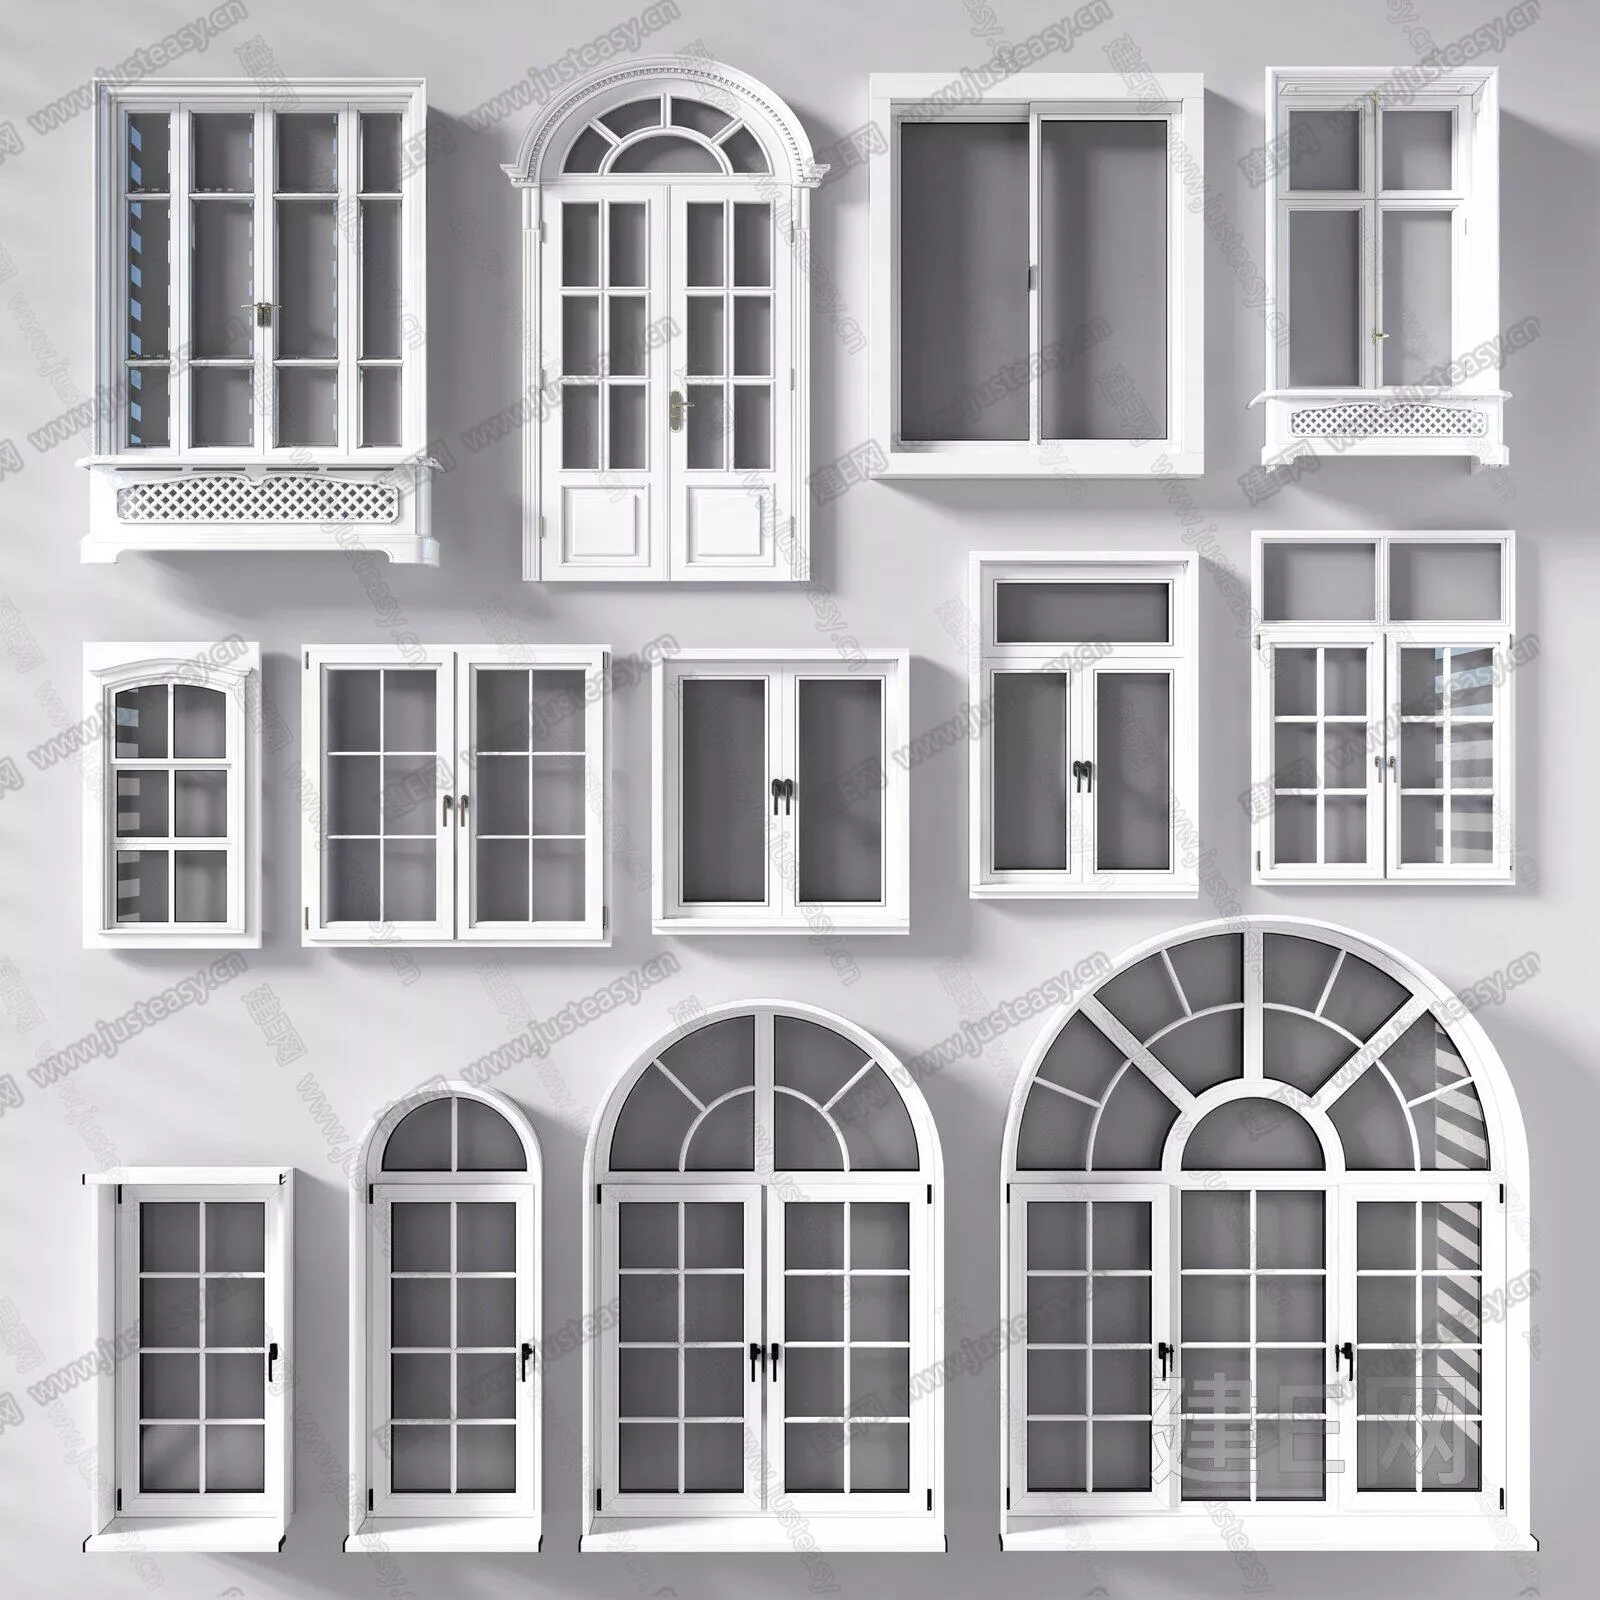 MODERN DOOR AND WINDOWS - SKETCHUP 3D MODEL - ENSCAPE - 112086284